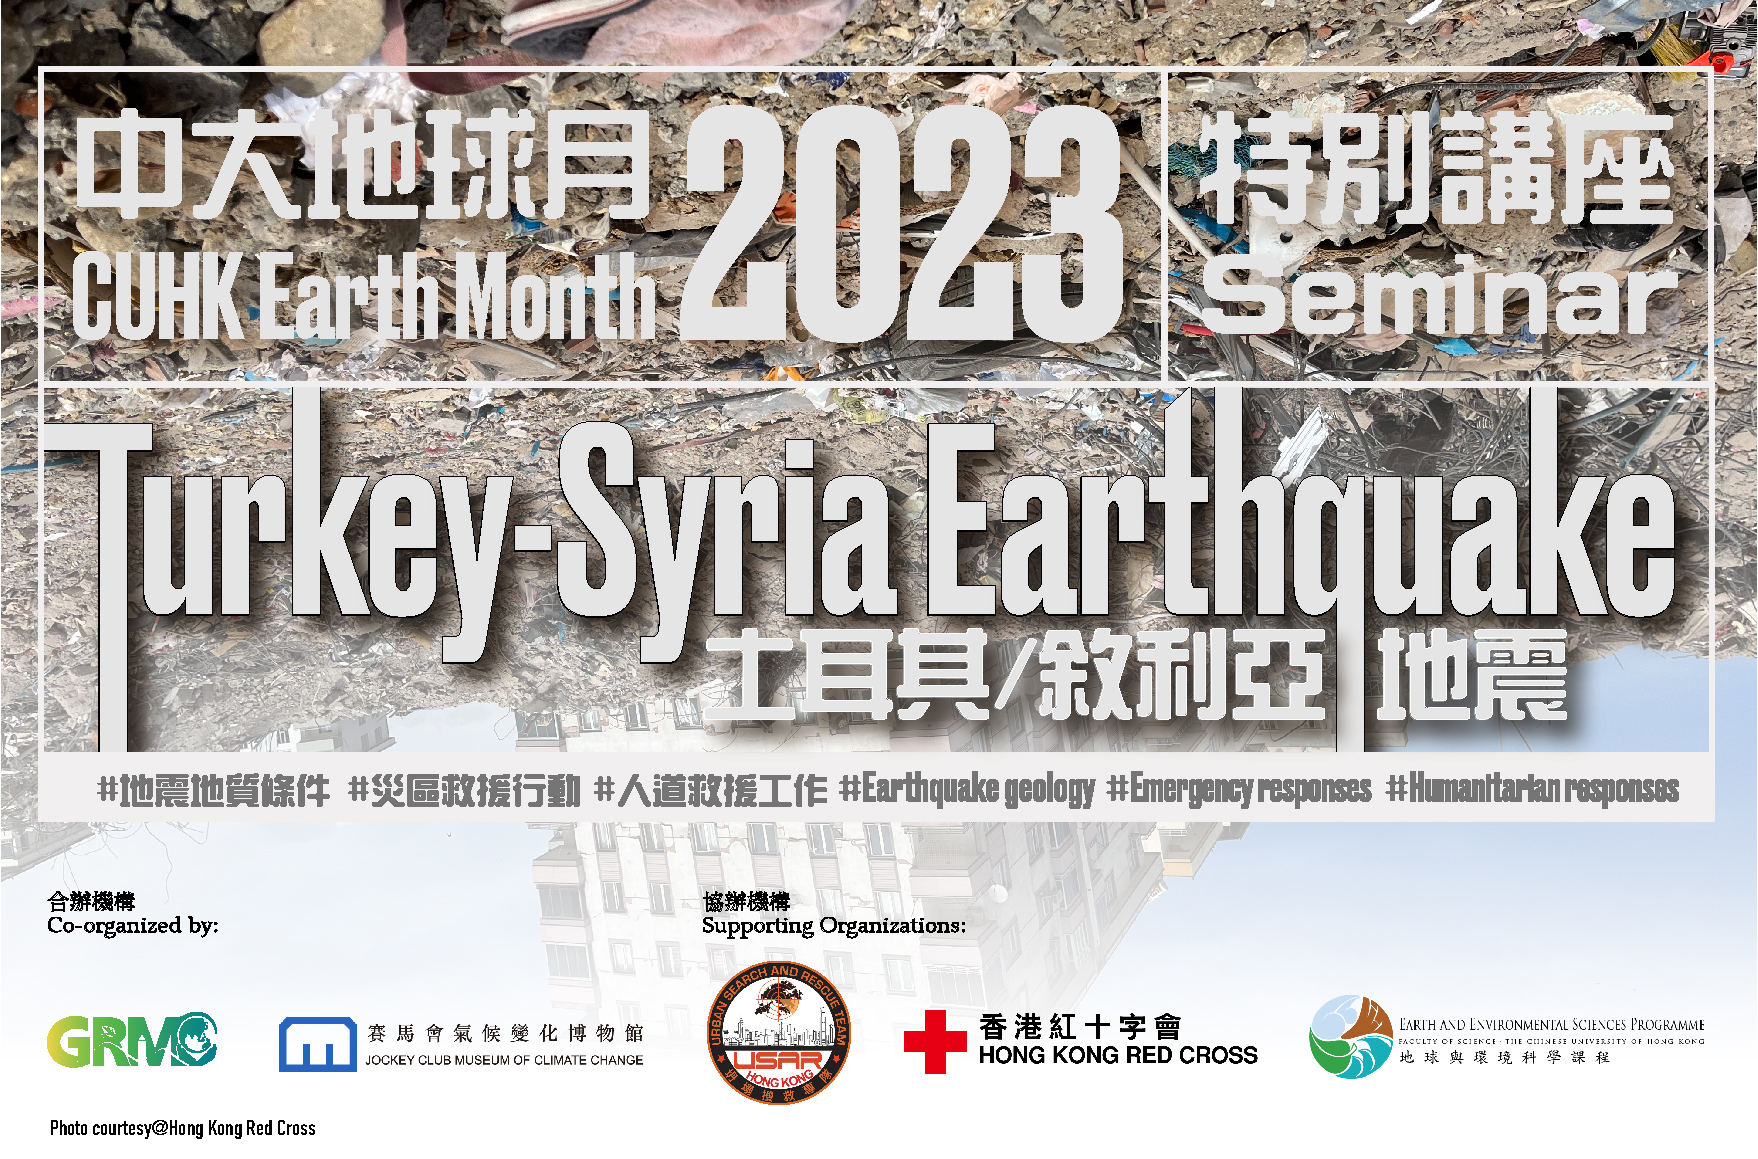 CUHK Earth Month 2023: Seminar on Turkey–Syria Earthquake